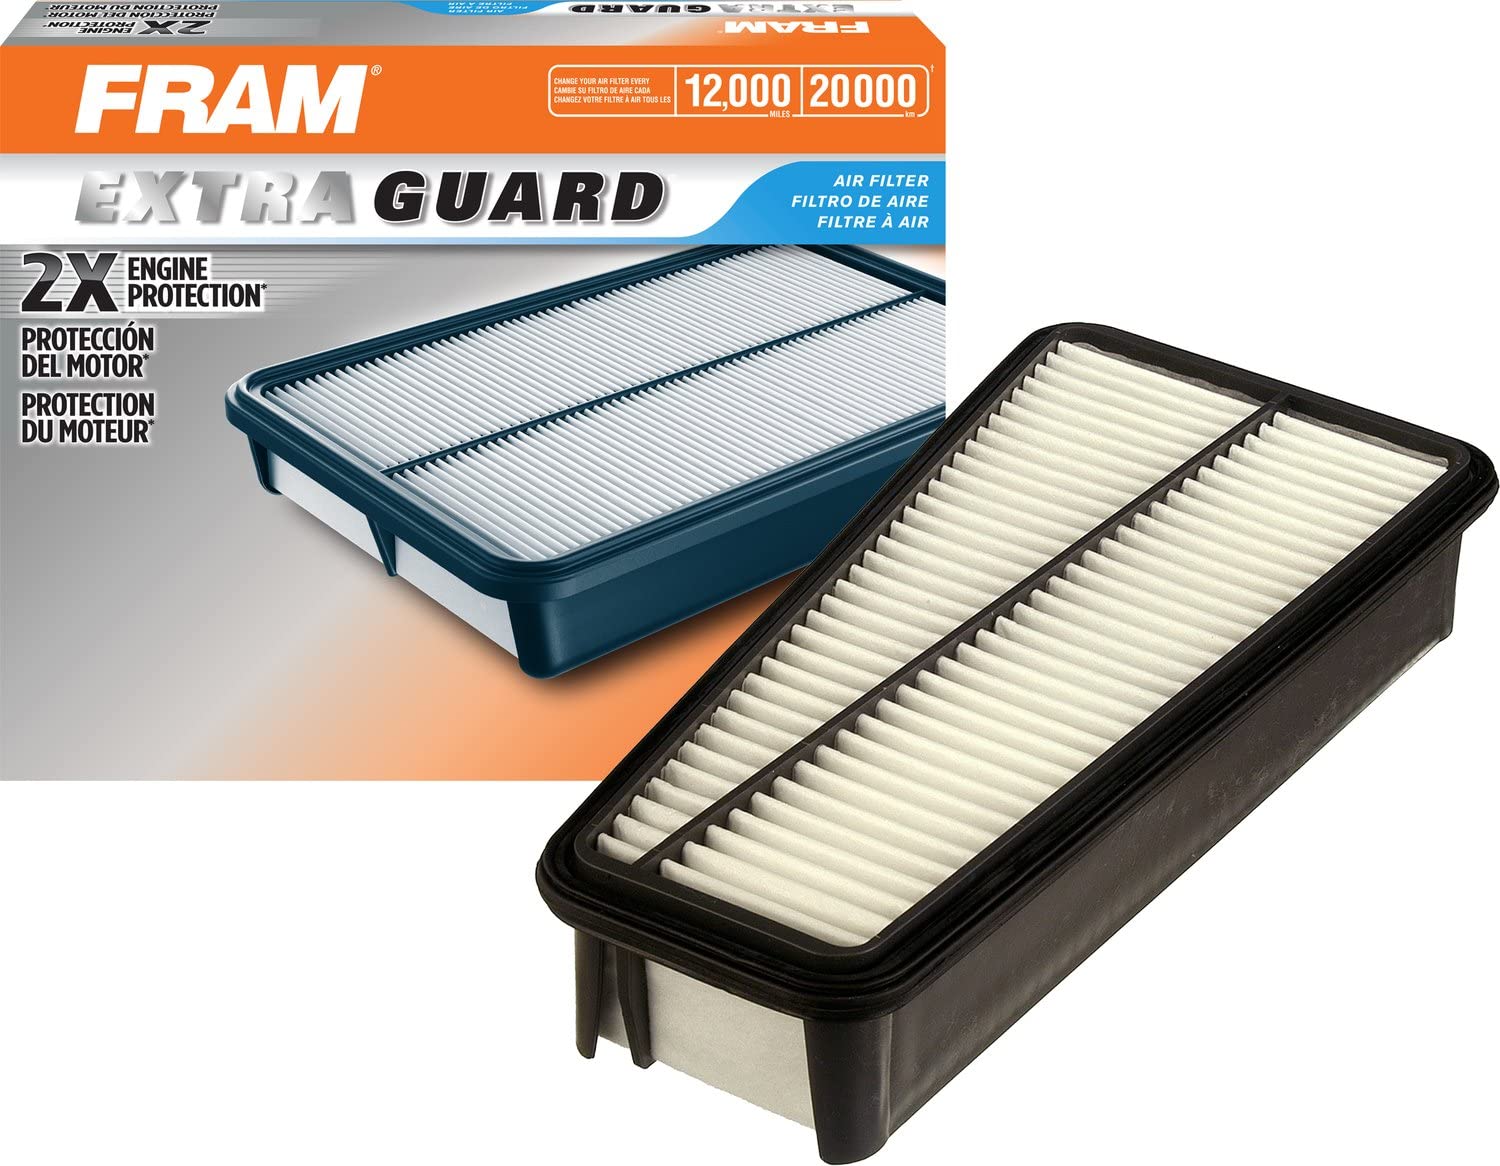 FRAM Extra Guard Air Filter, CA9683 for Select Toyota Vehicles (Original Version)